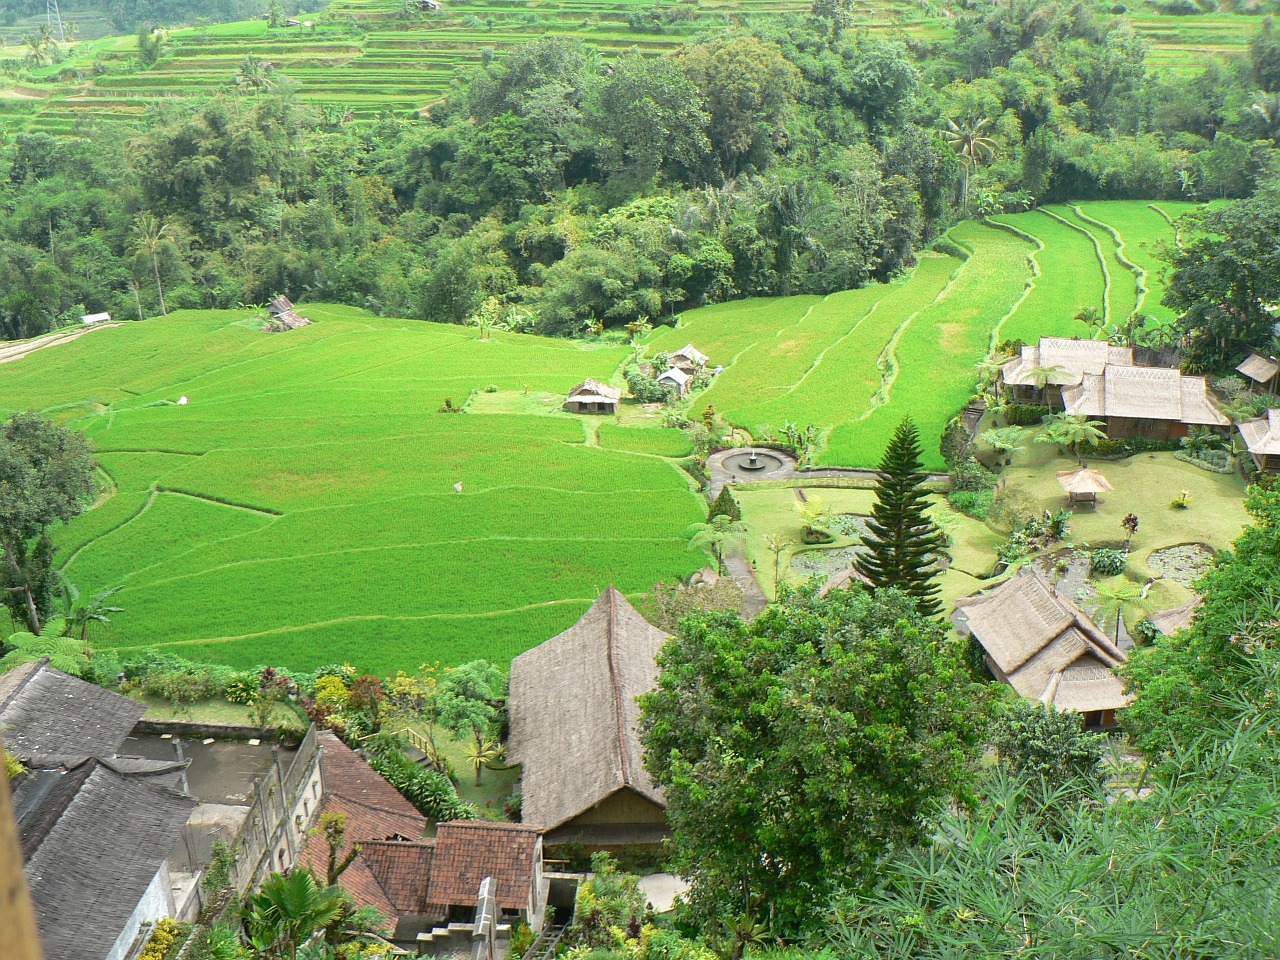 indonesia bali landscape free photo